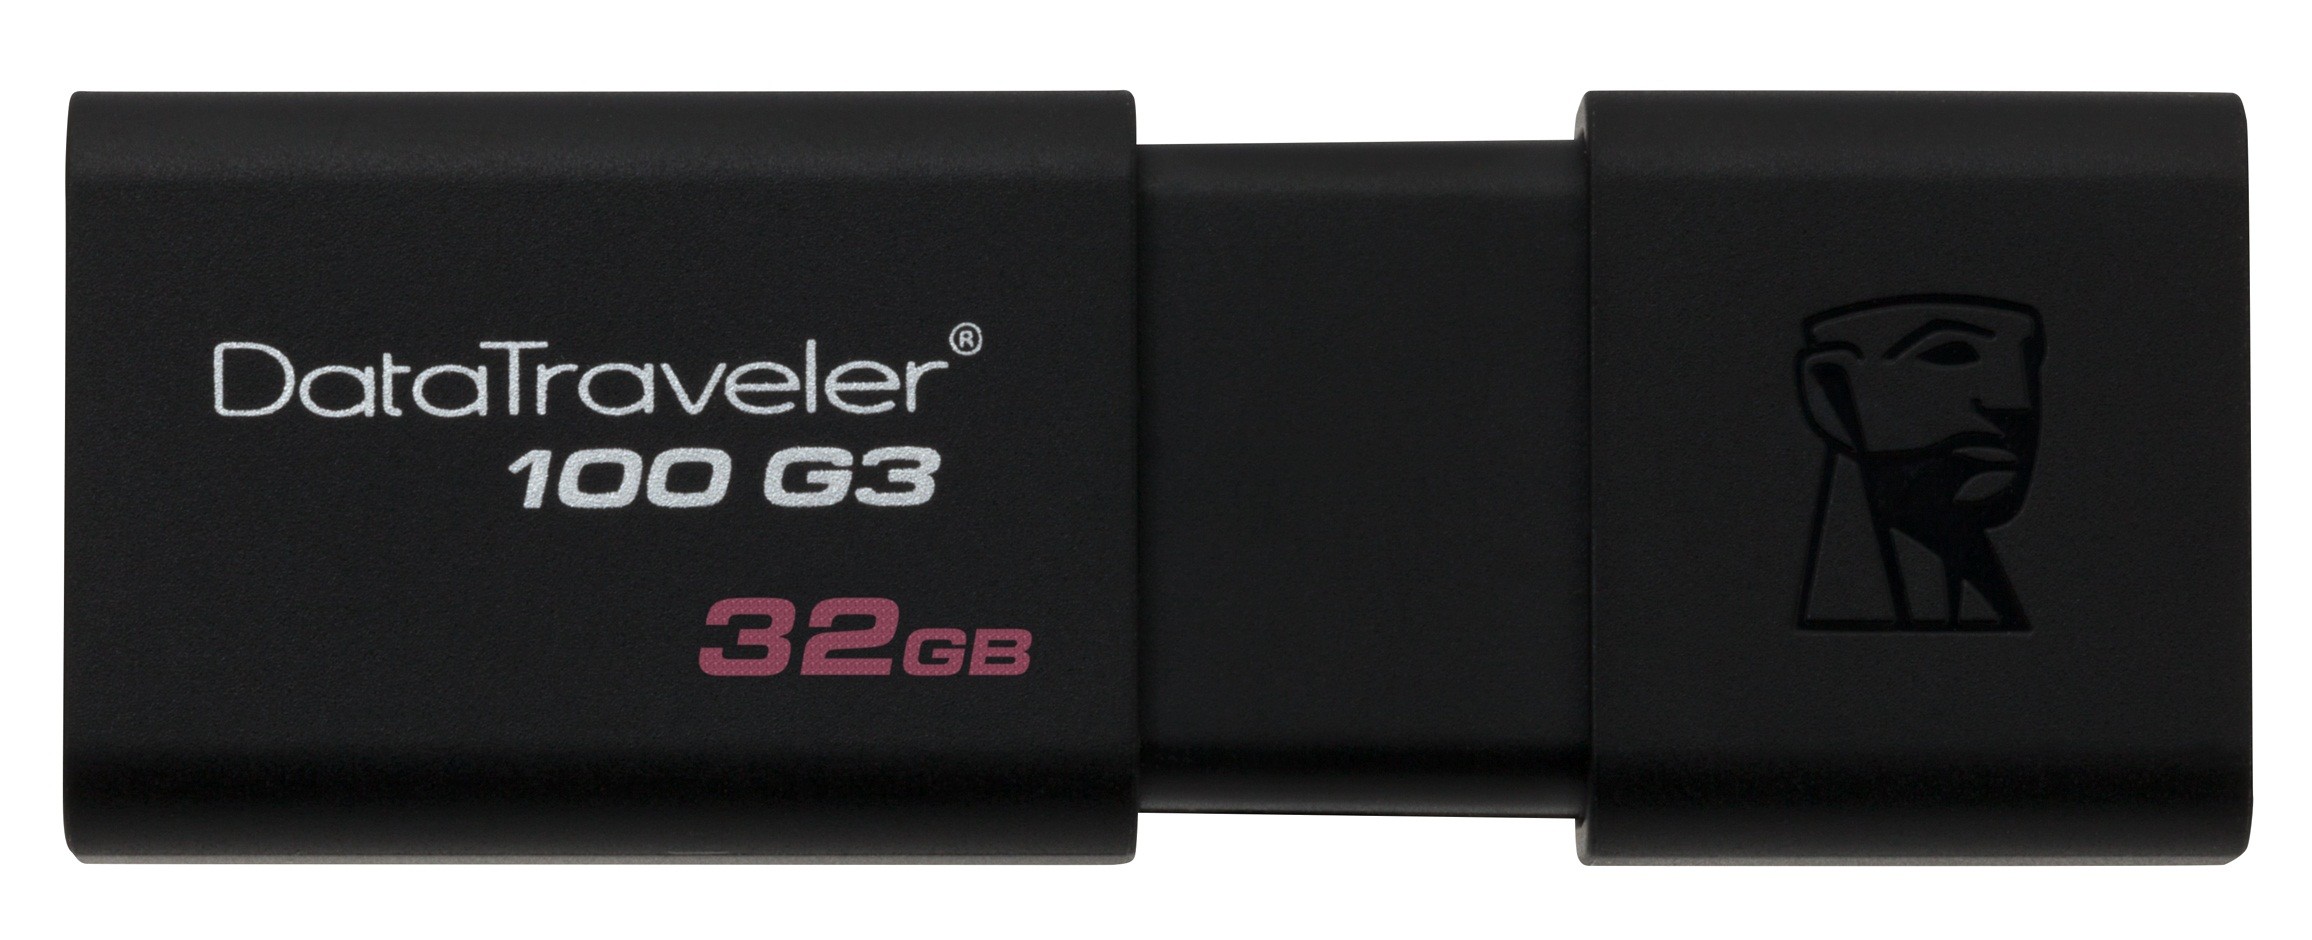 USB-накопитель 32GB KINGSTON DataTraveler 100 G3 (DT100G3/32GB) в Киеве